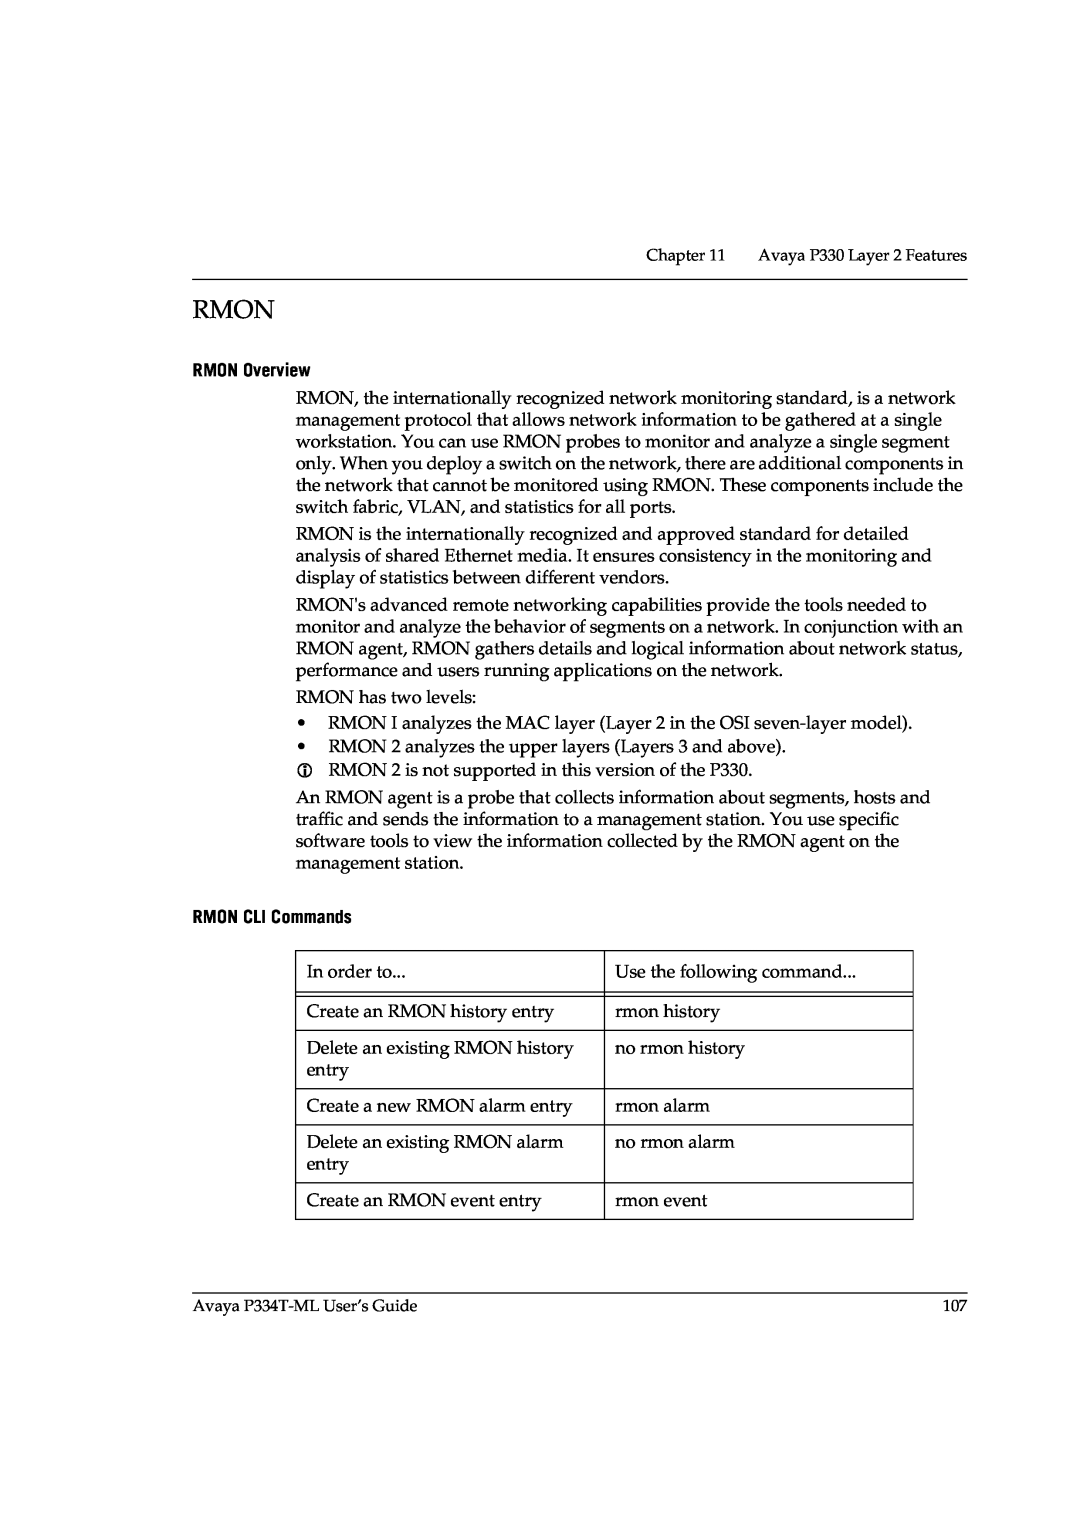 Avaya P3343T-ML manual Rmon, RMON Overview, RMON CLI Commands 